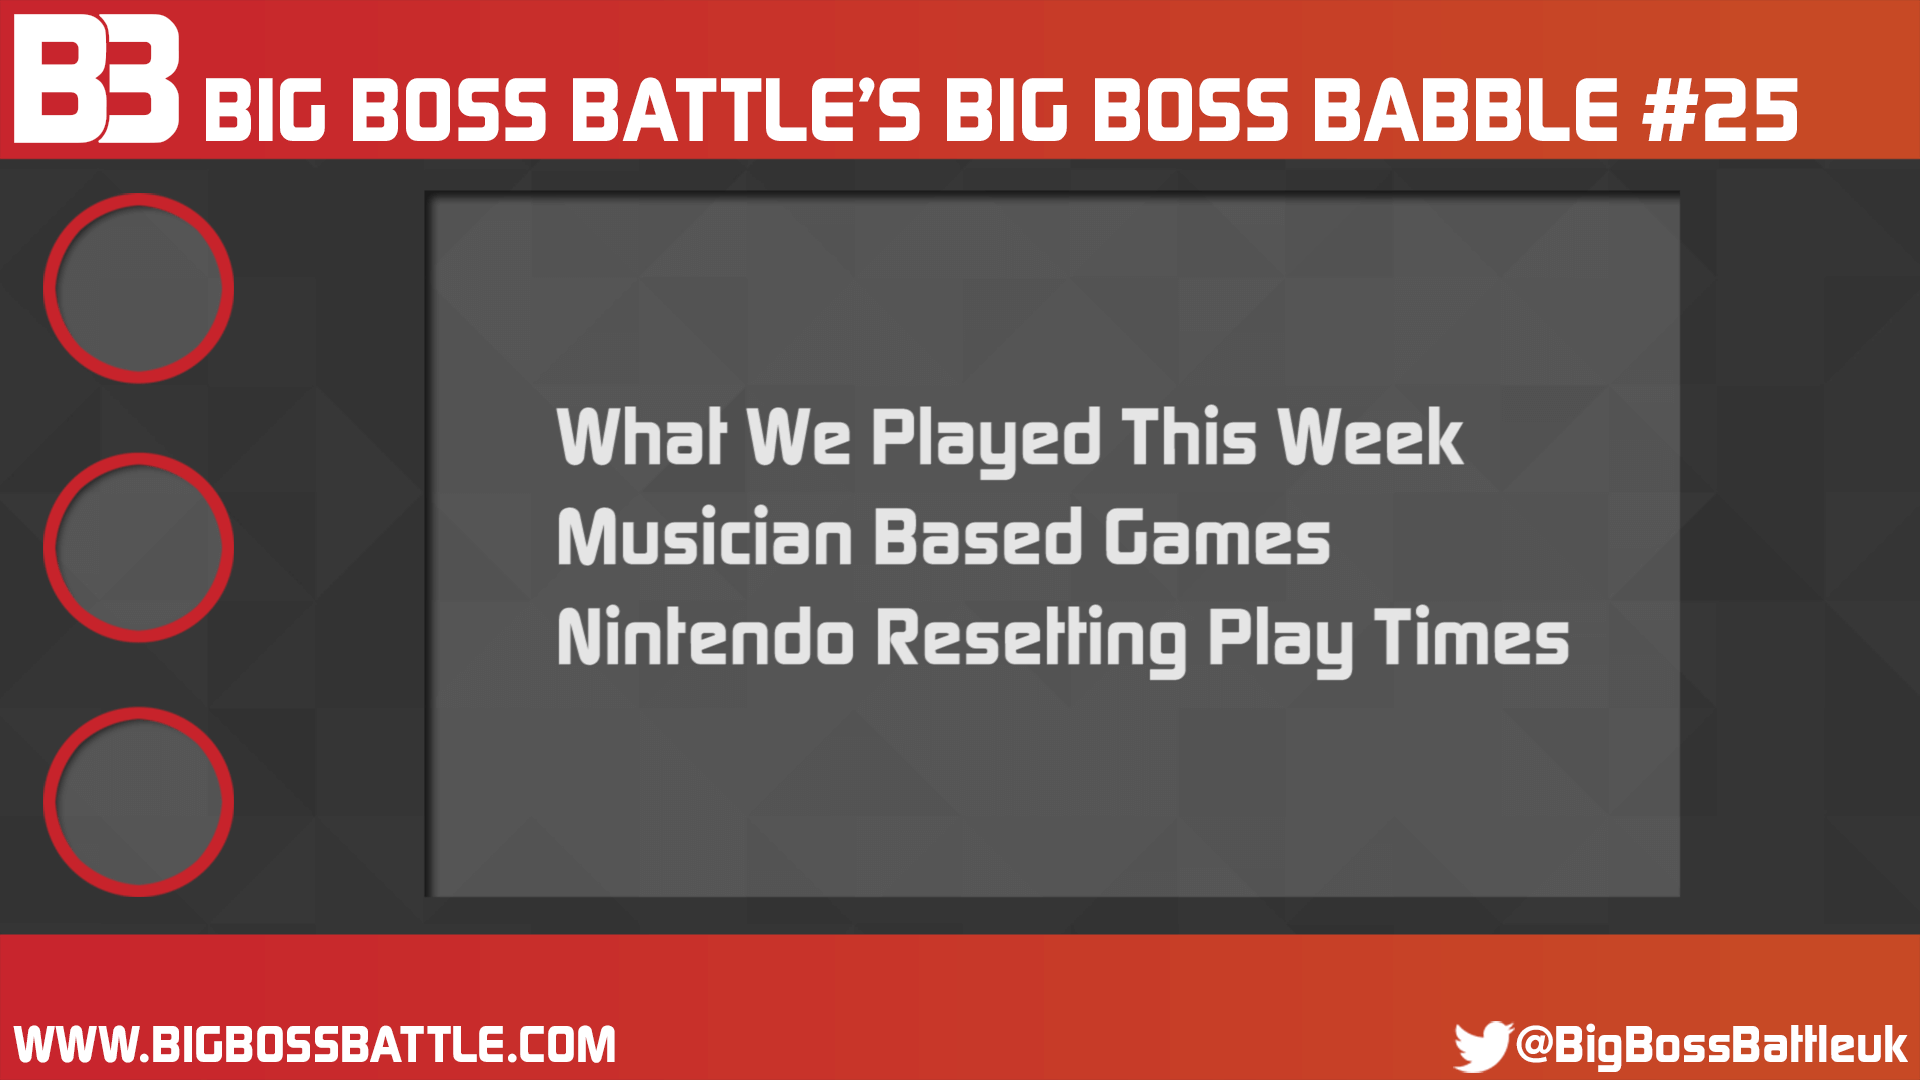 Big Boss Babble Episode 25